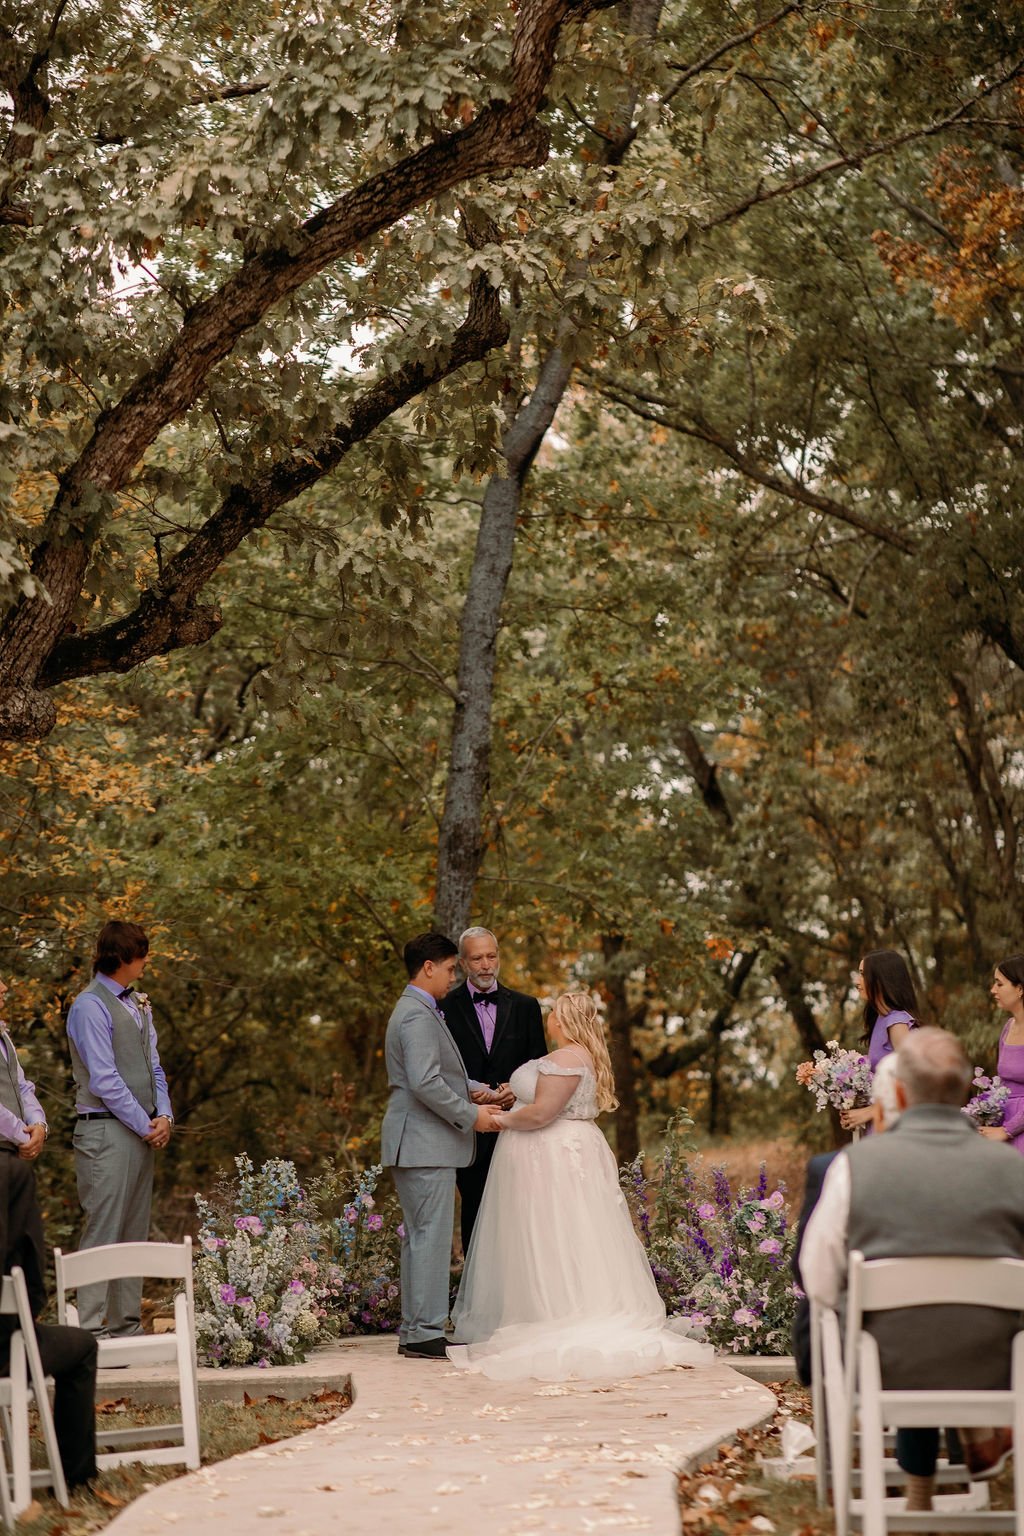 Riverbend Chapel at Dream Point Ranch Tulsa Bixby Jenks Broken Arrow Oklahoma Wedding Venue (72).jpg